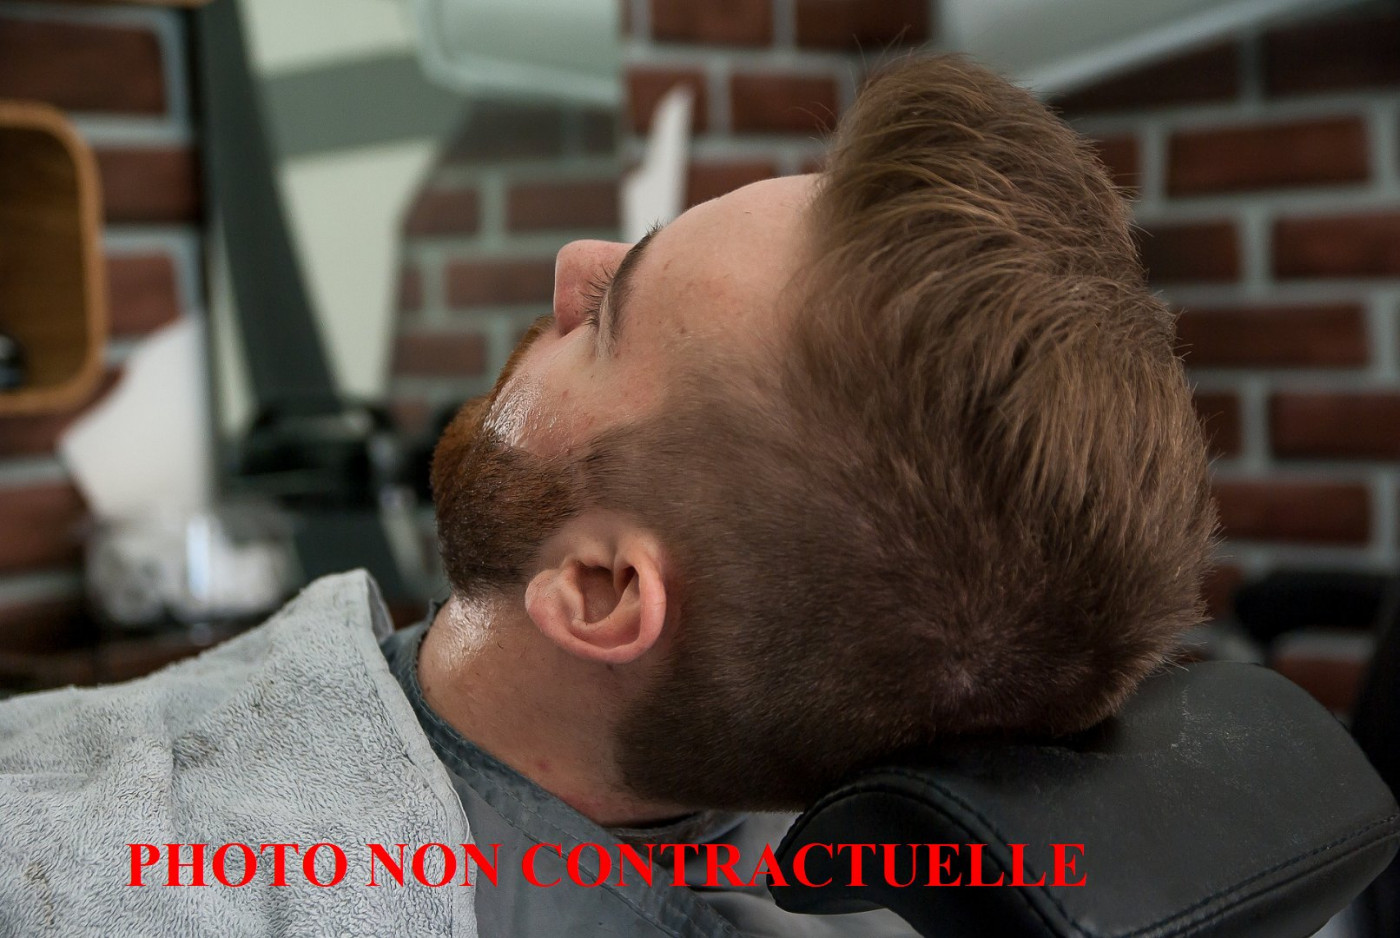  vendre Salon de coiffure Aix Les Bains